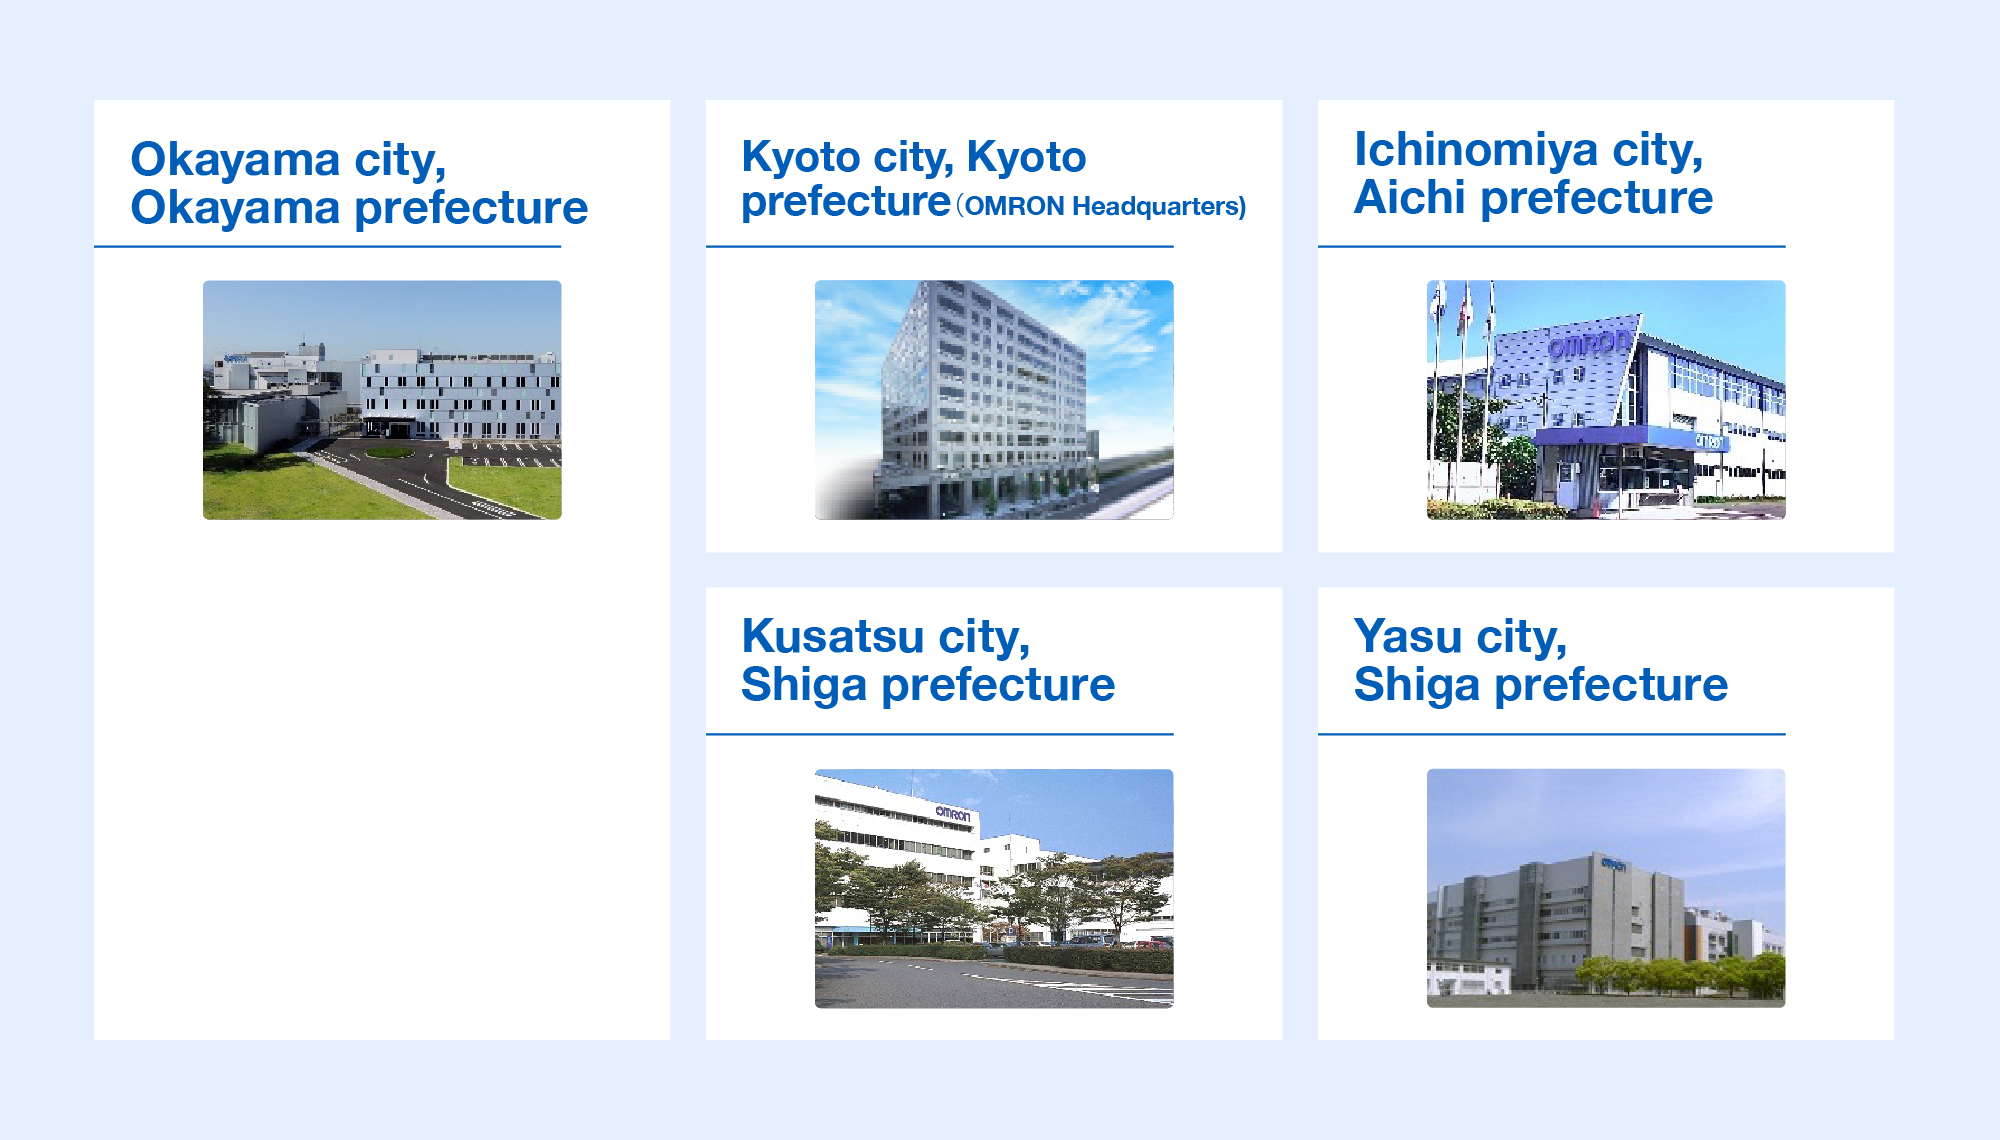 Okayama city, Okayama prefecture / Kyoto city, Kyoto prefecture (OMRON Headquarters) / Ichinomiya city, Aichi prefecture / Kusatsu city, Shiga prefecture / Yasu city, Shiga prefecture